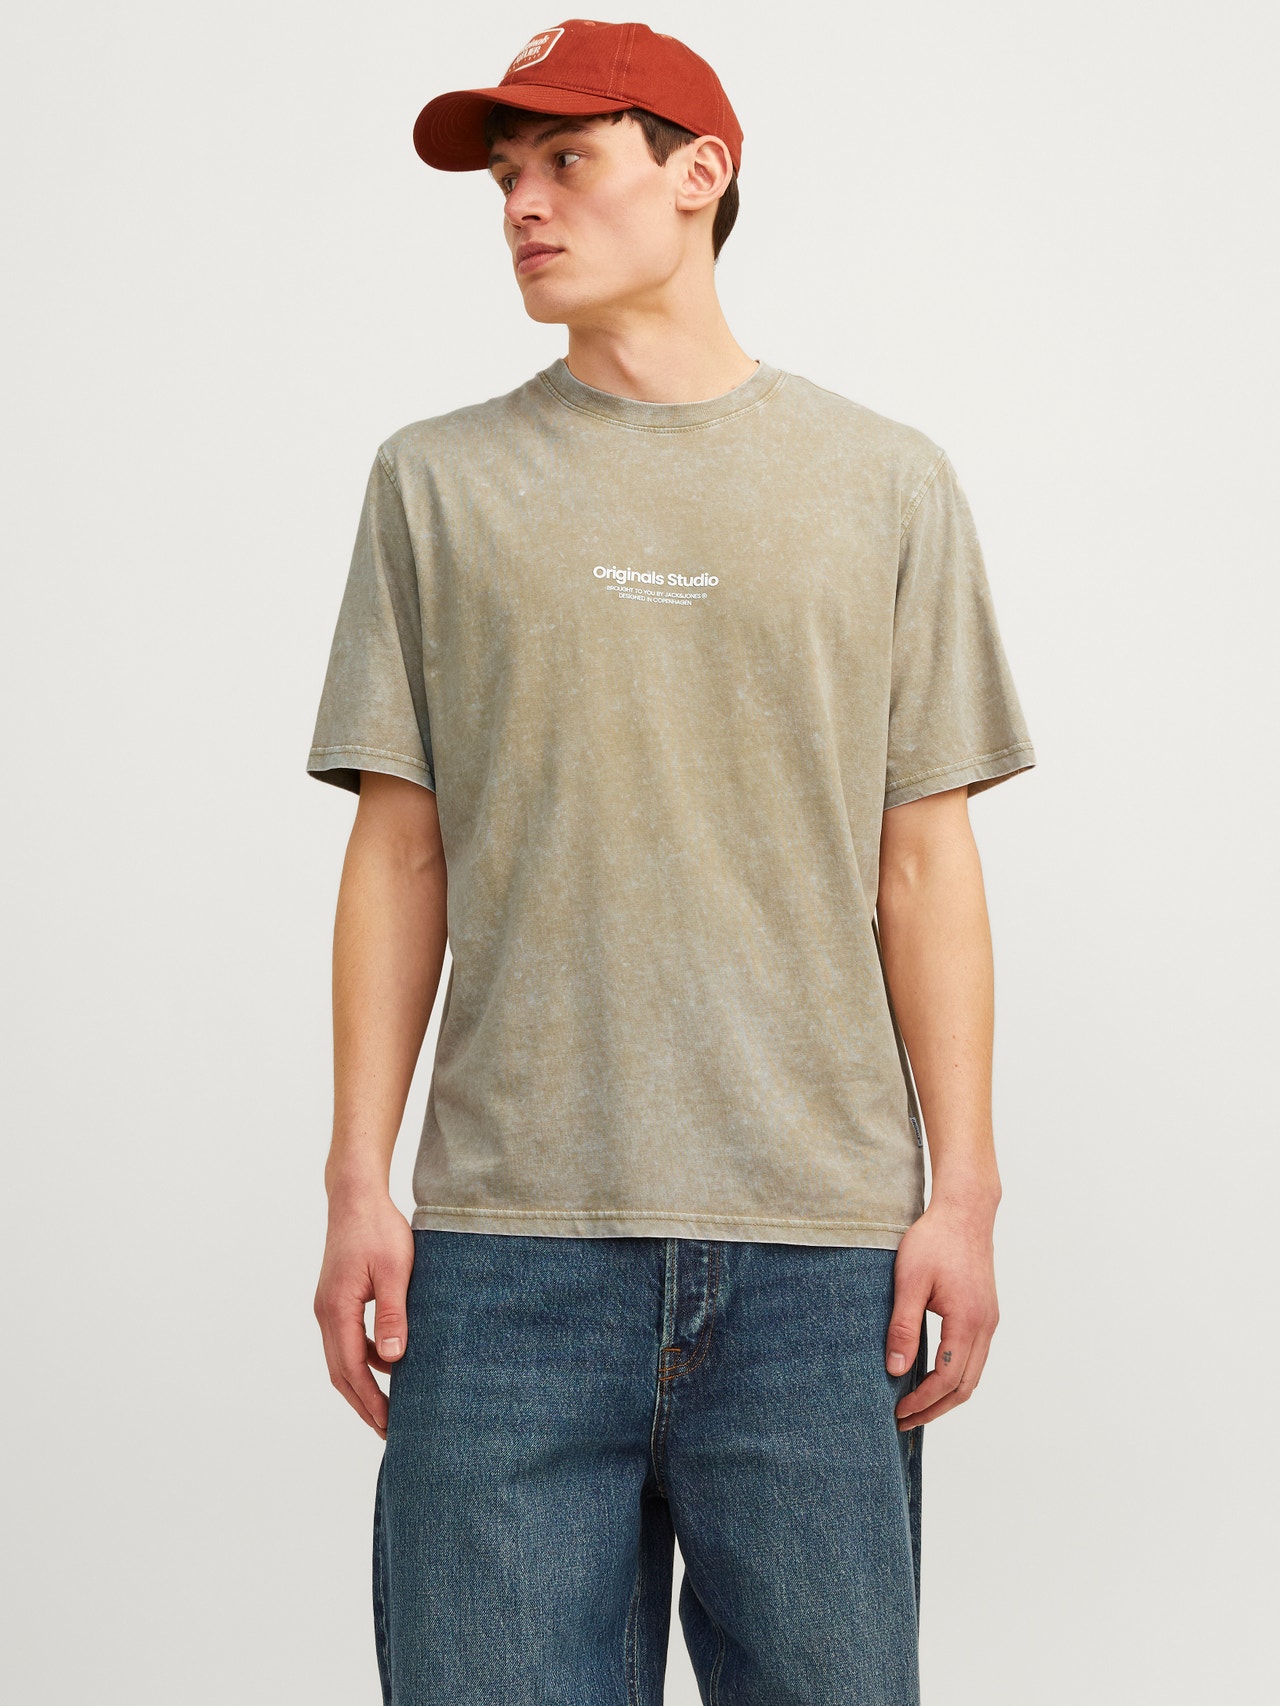 Jack & Jones Printed Crew neck T-shirt -Silver Sage - 12256715